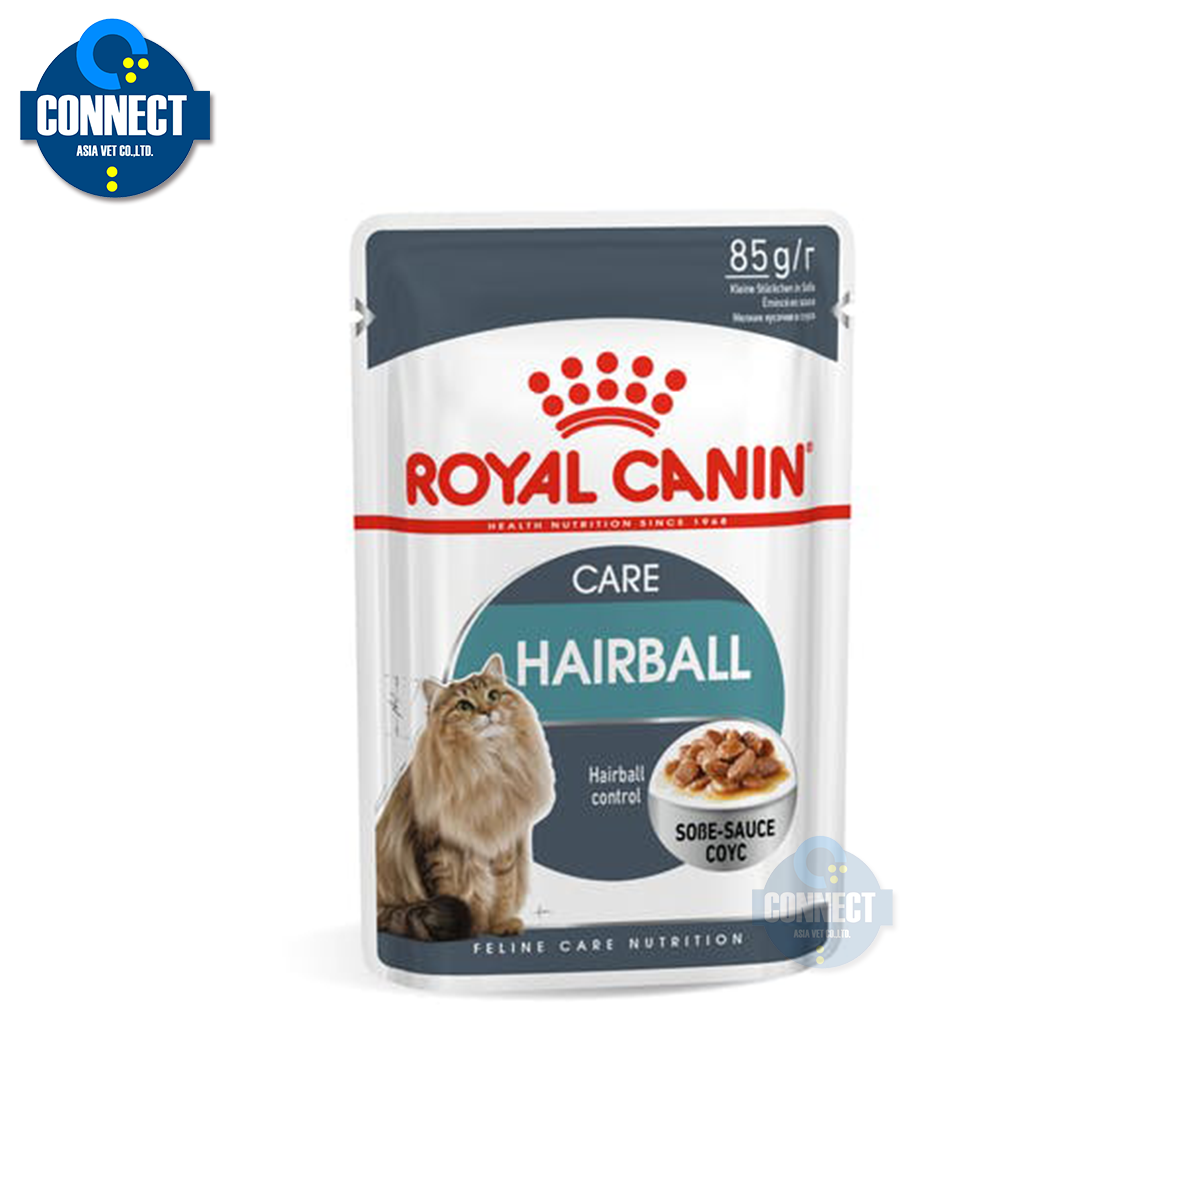 Royal Canin Hairball Care Gravy ขนาด 85 กรัม จำนวน 12 ซอง.